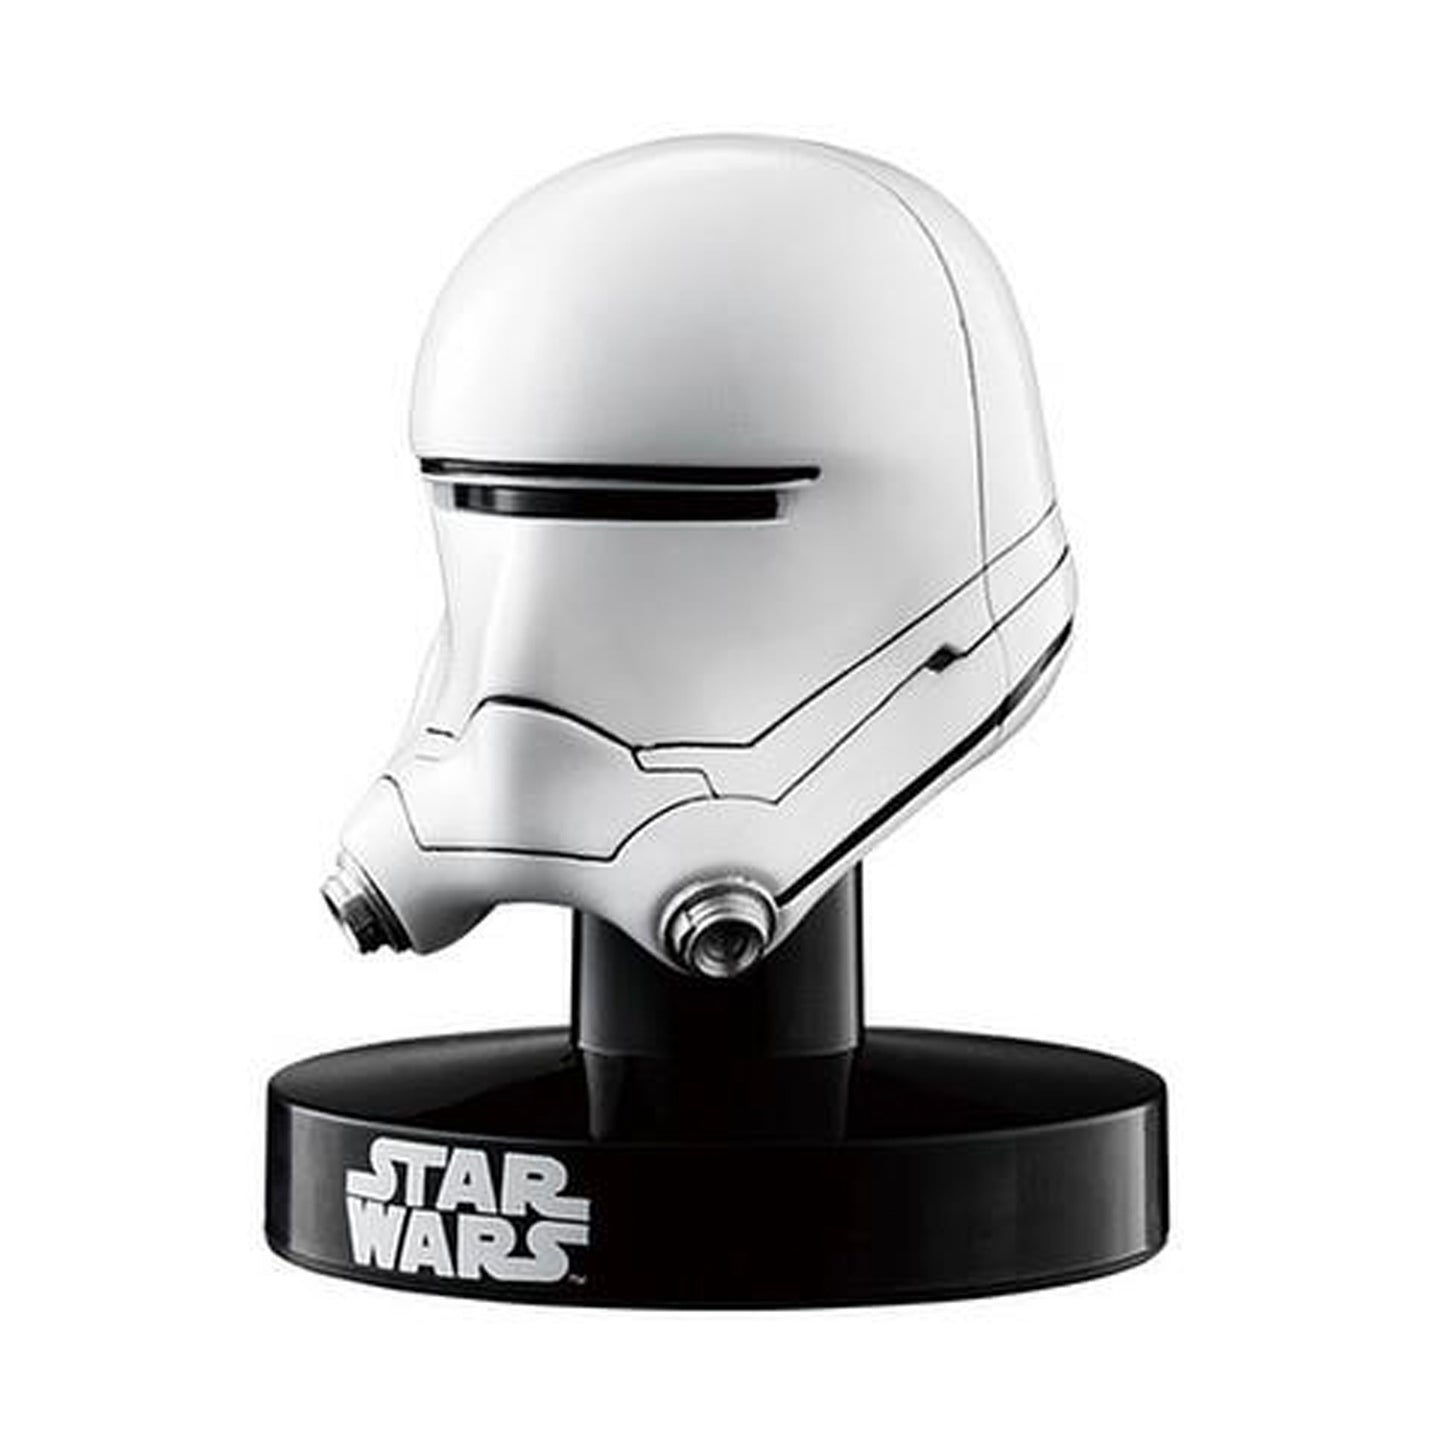 Bandai: Star Wars - The Force Awakens Helmet Replica Blind Box